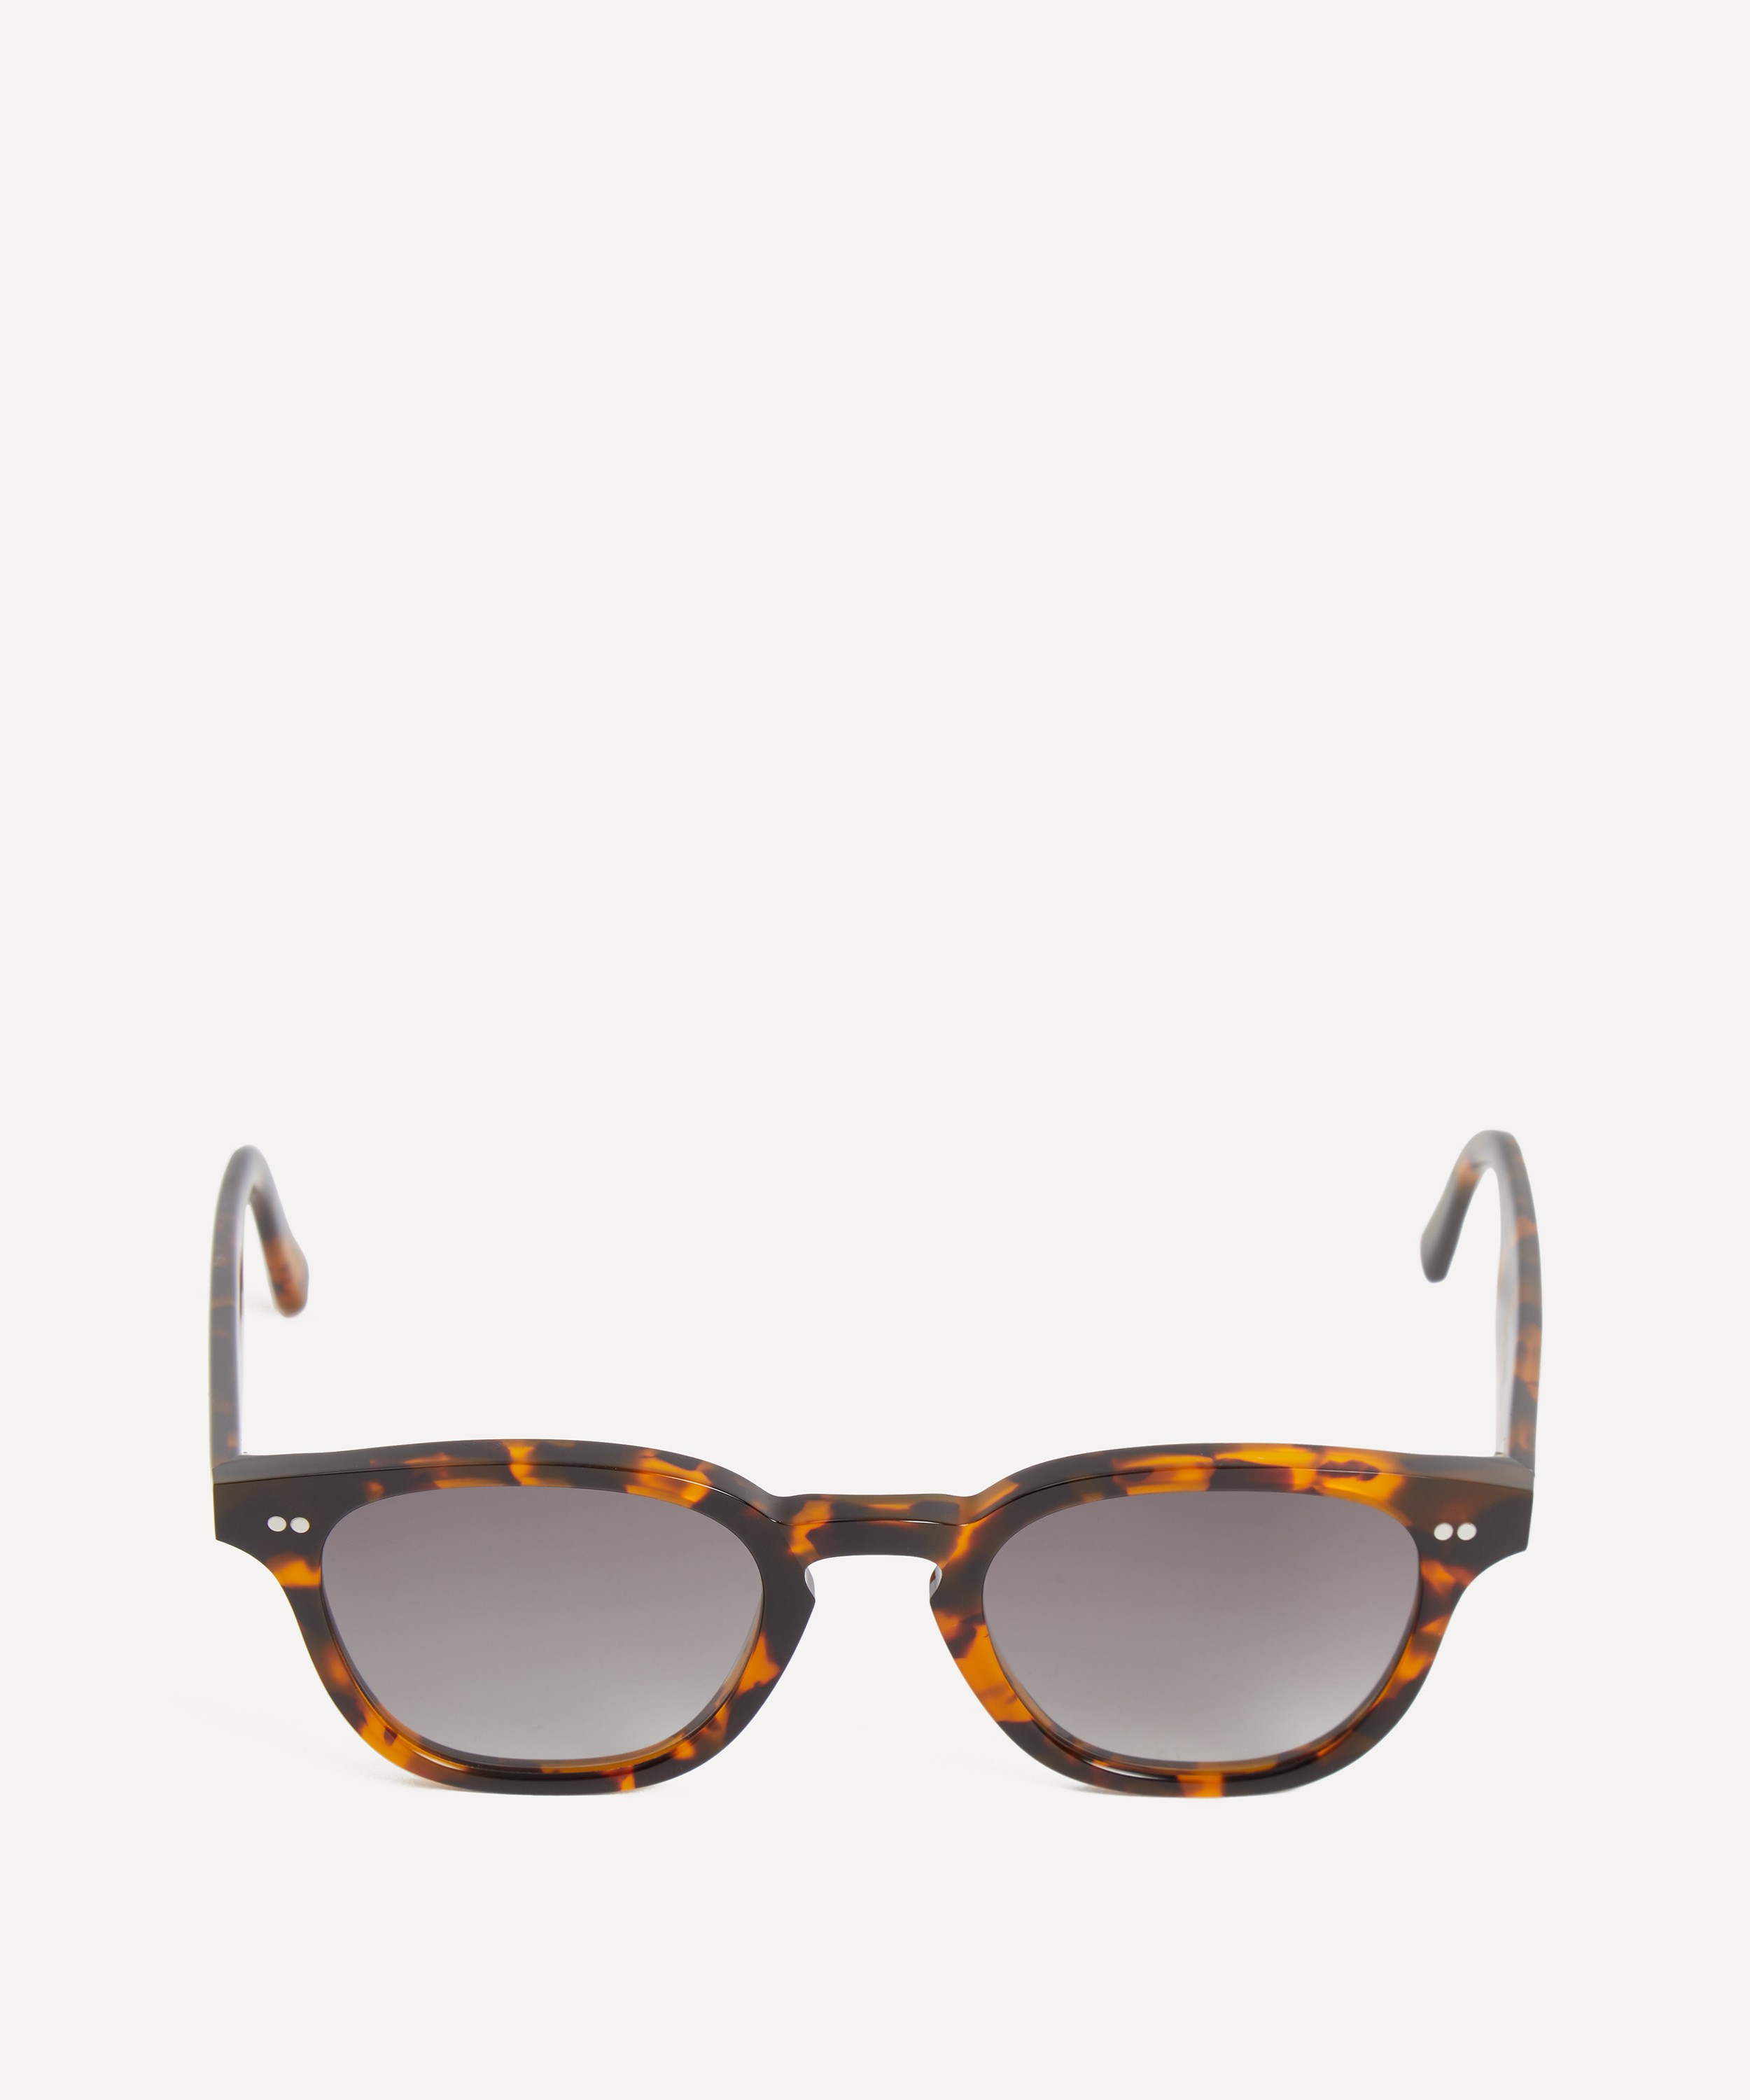 Monokel Eyewear - River Square Sunglasses image number 0